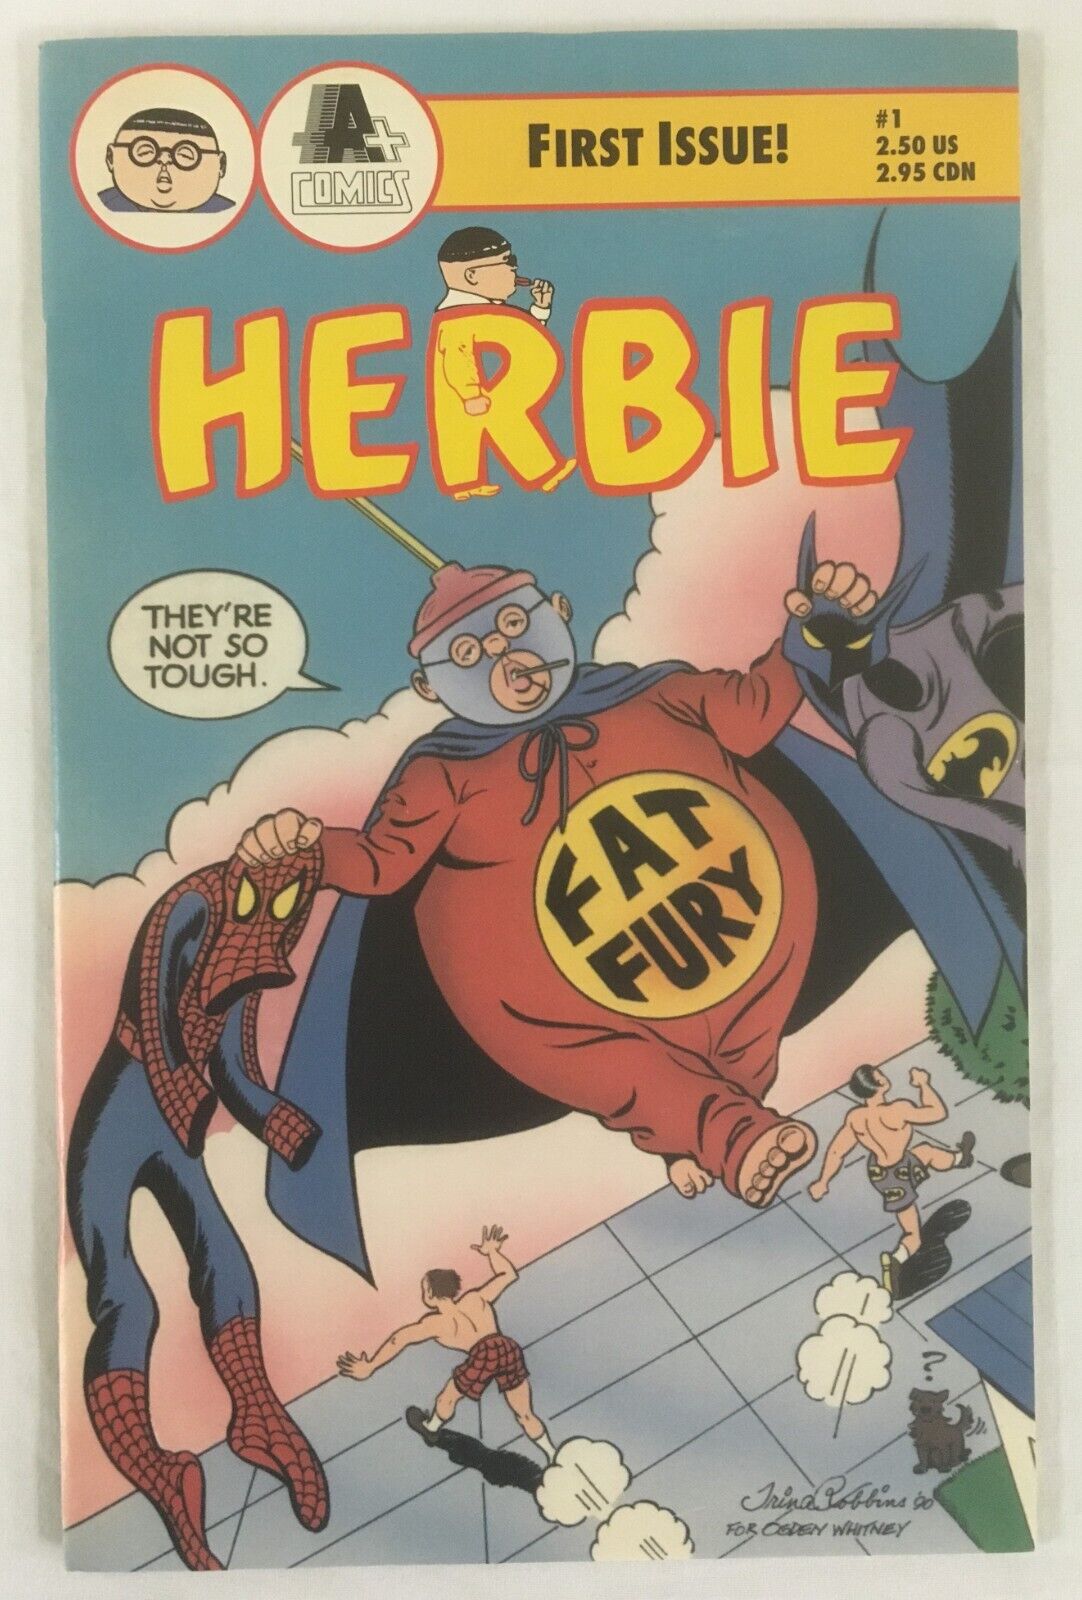 Herbie Comic issue  #1 A+ Comics Reprint 1990 NM- 9.2 Grade